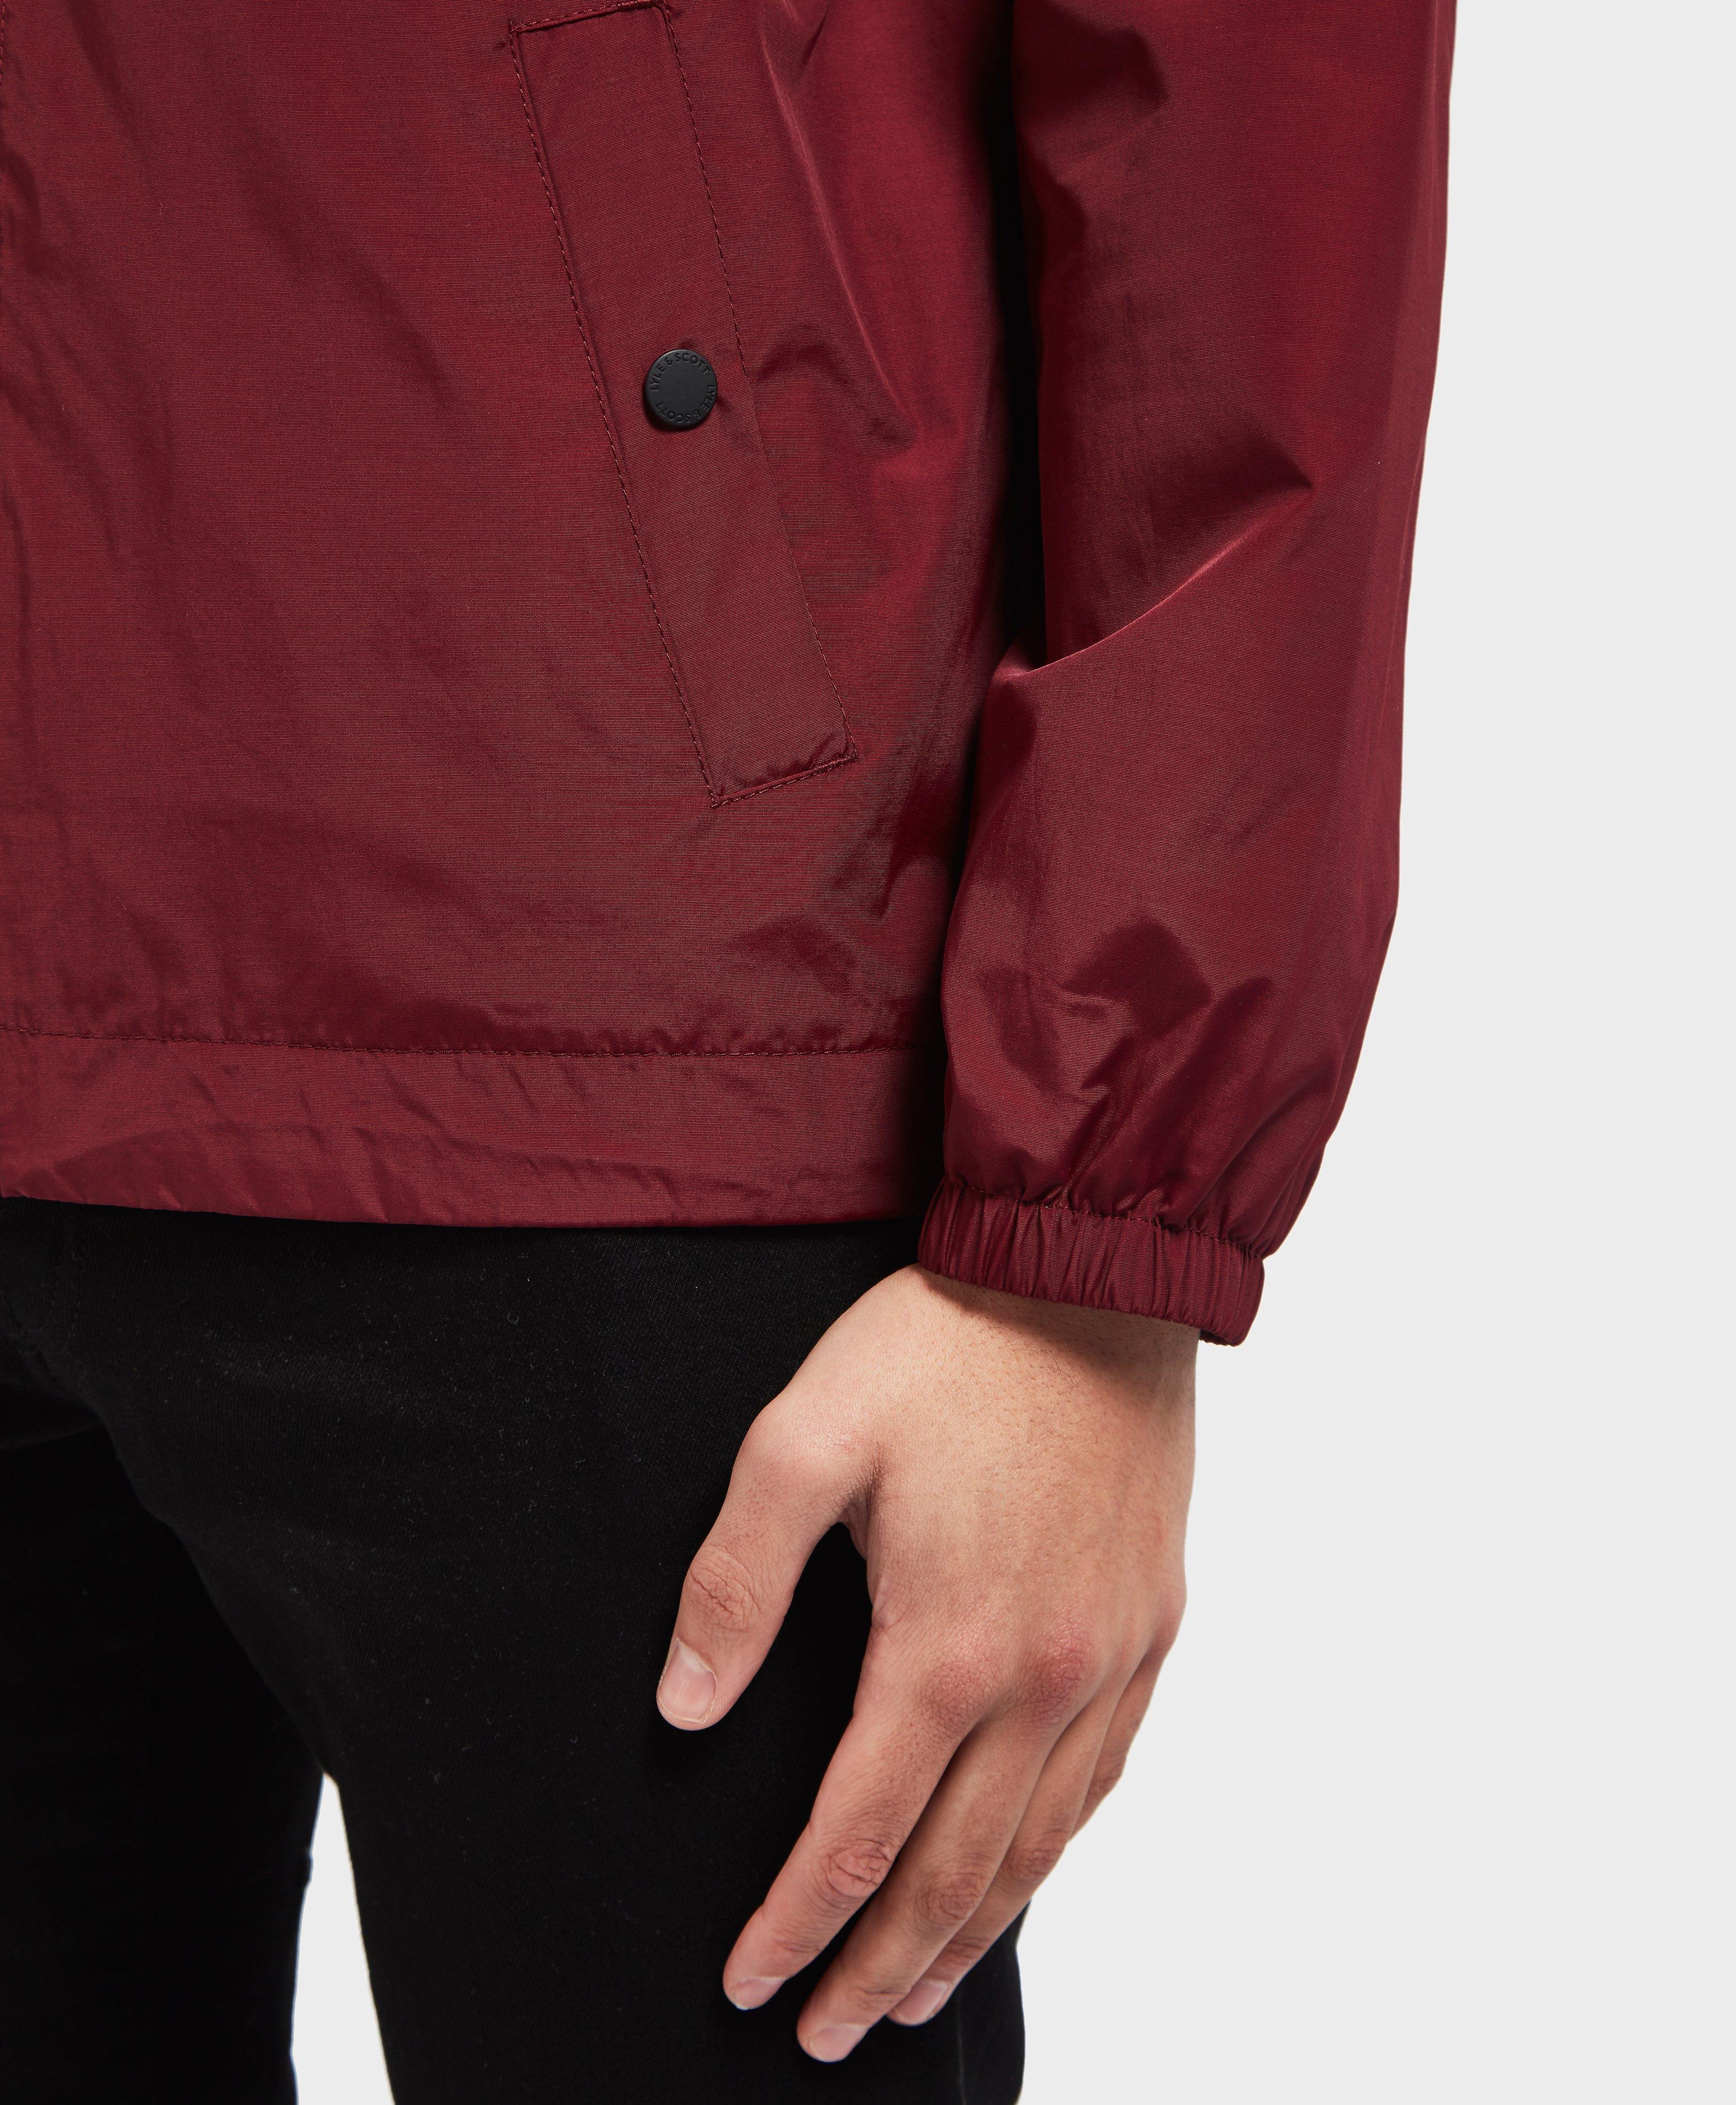 lyle & scott zip through hooded core jacket